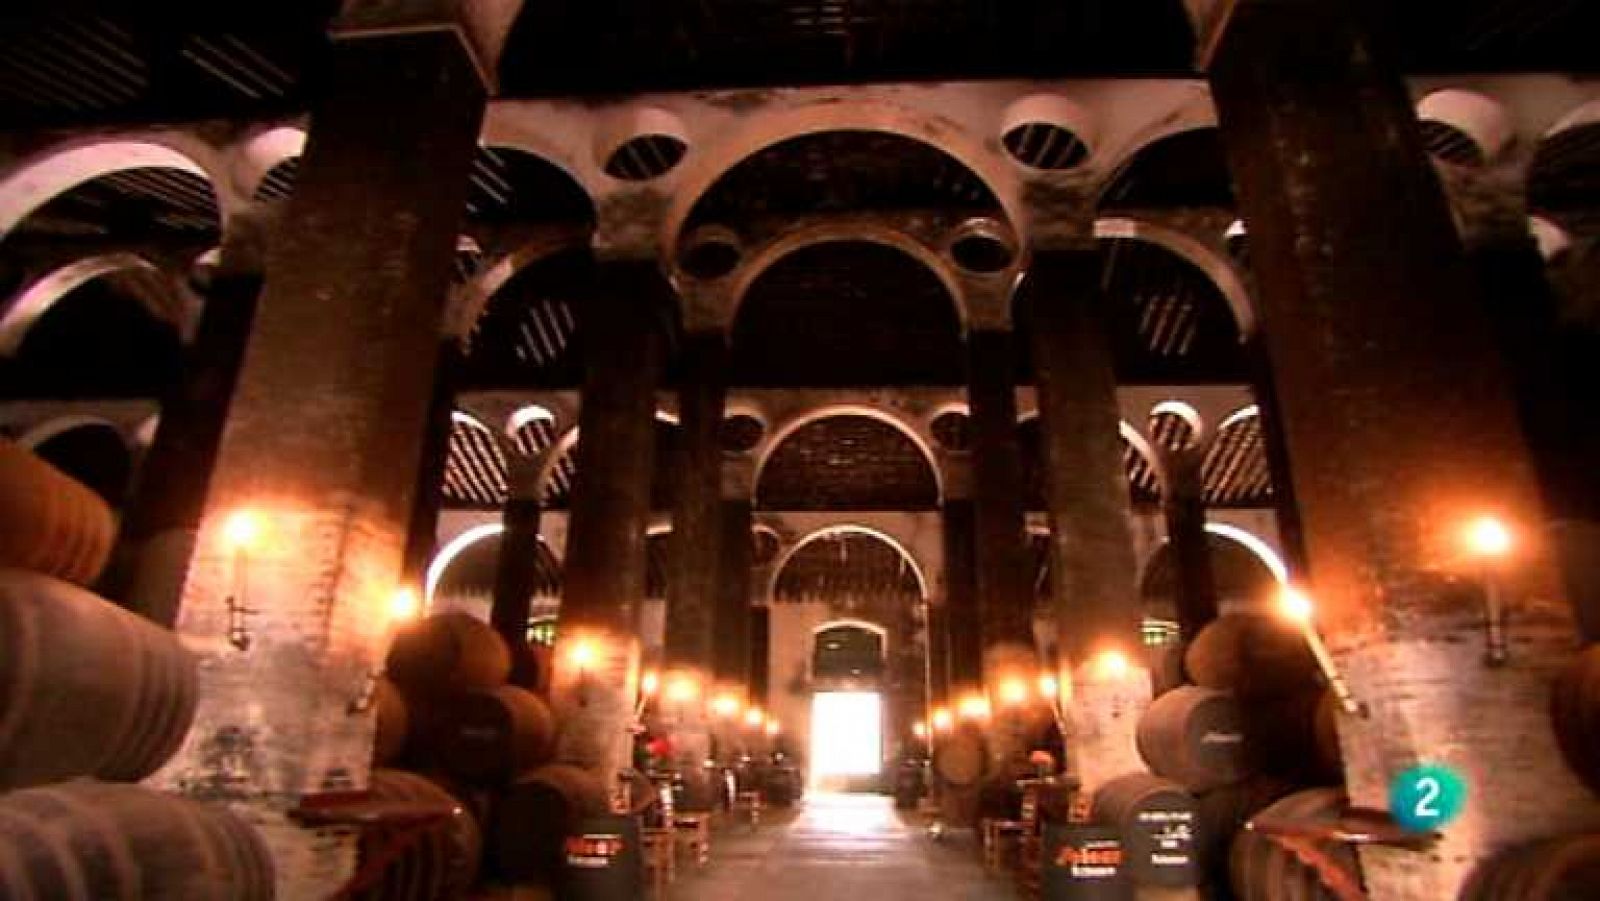 Documental - Las catedrales del vino